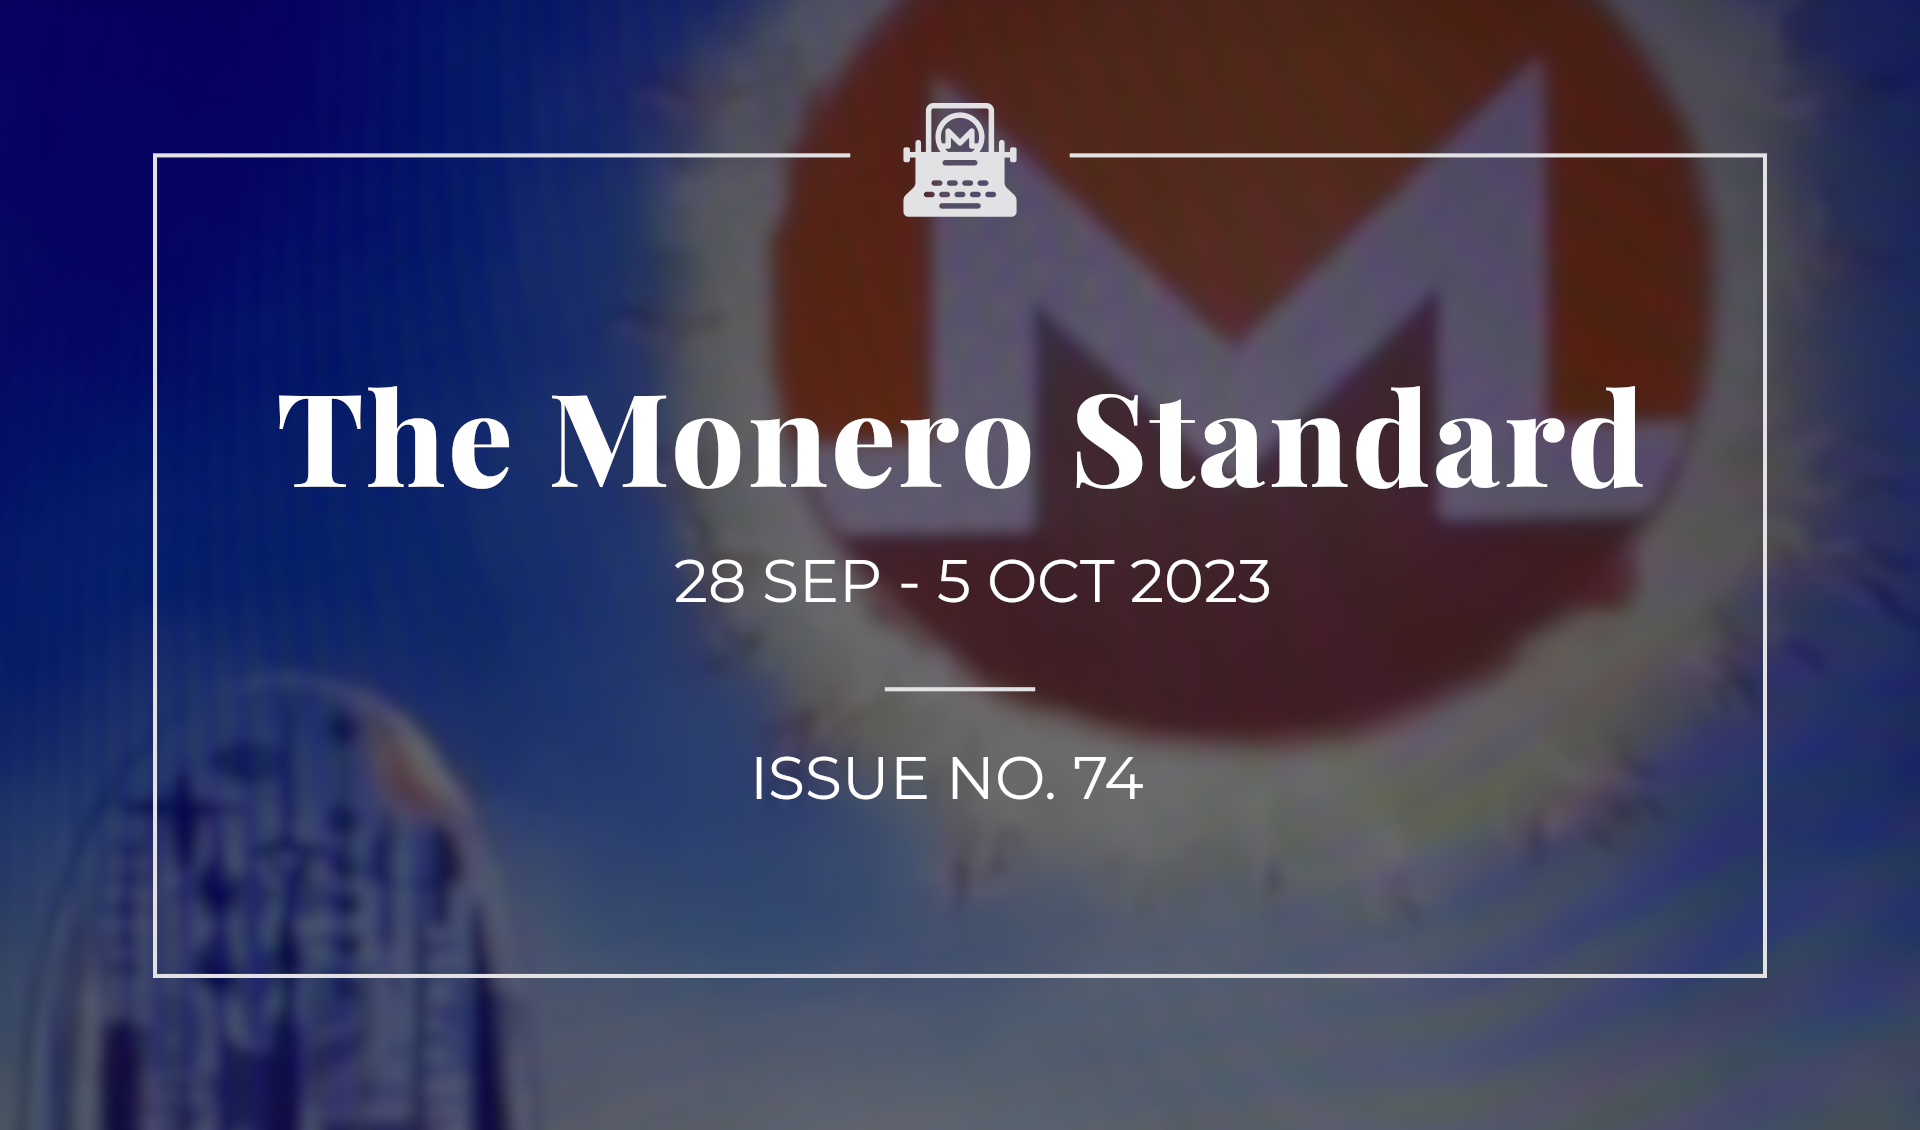 The Monero Standard #74: 28 Sept 2023 - 5 Oct 2023